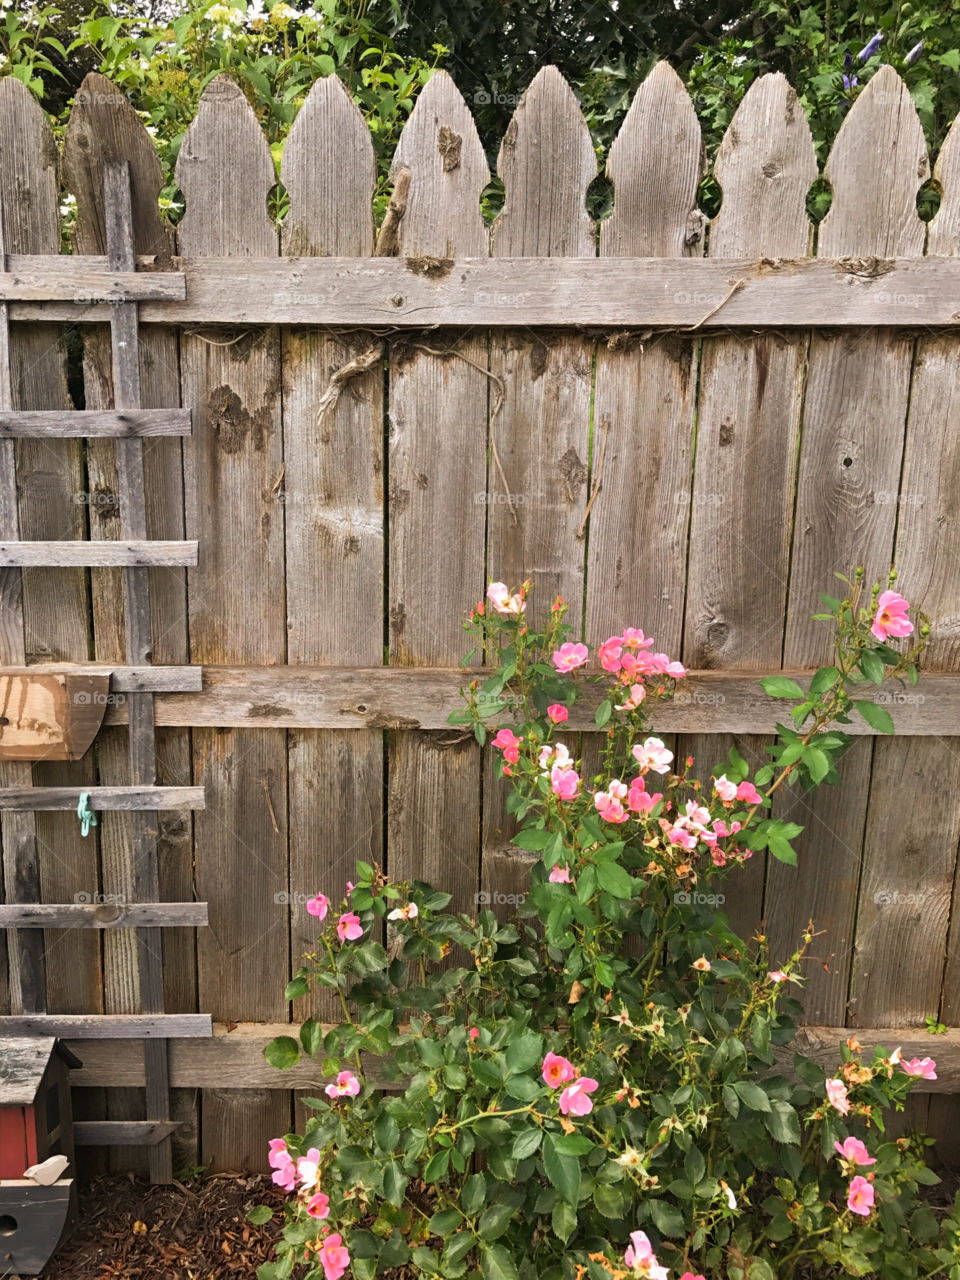 A bountiful bush of pink flowers grows along a garden fence.